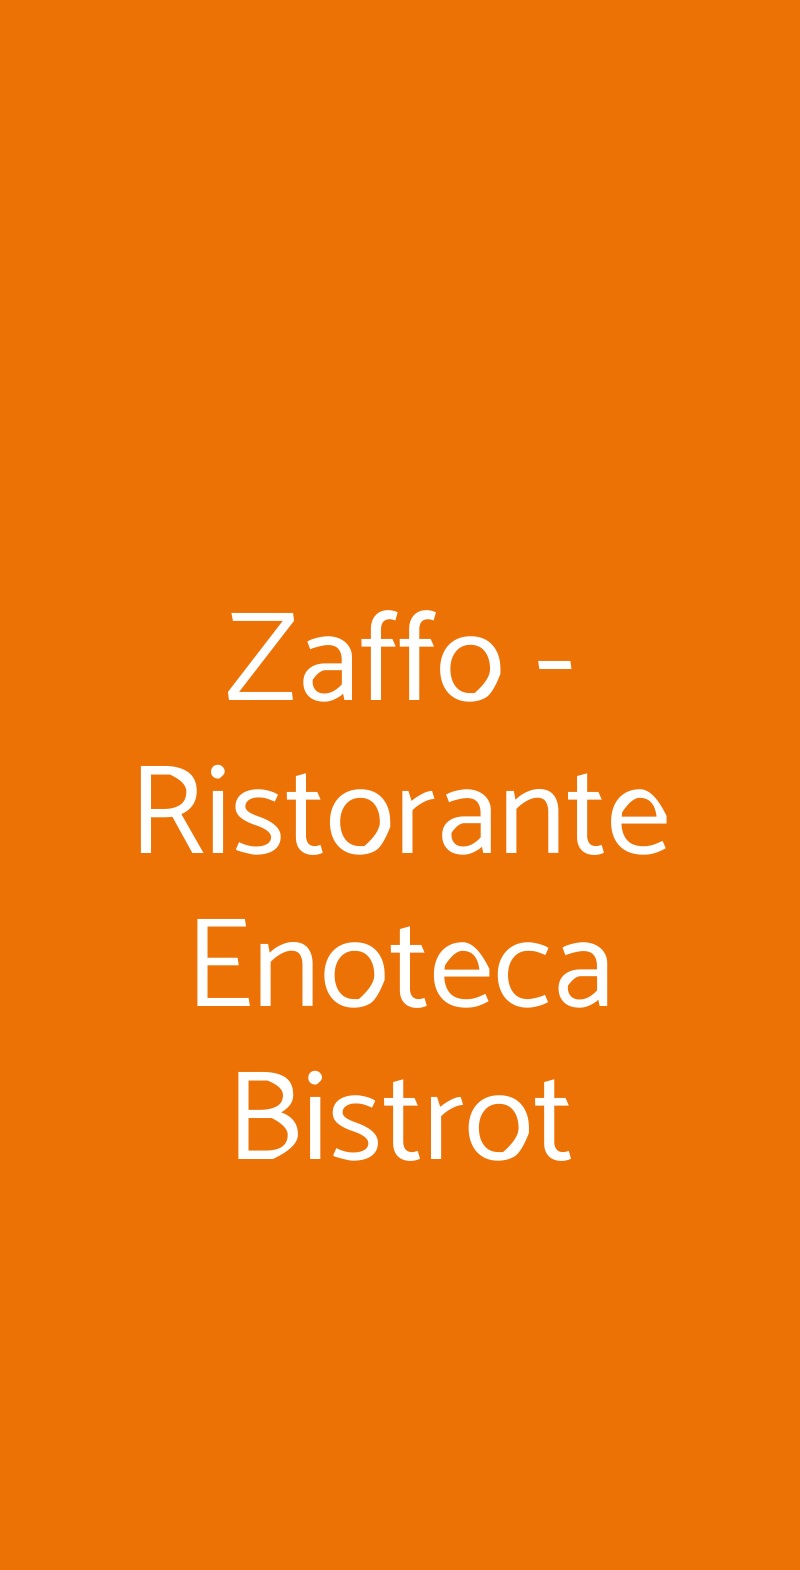 Zaffo - Ristorante Enoteca Bistrot Frascati menù 1 pagina